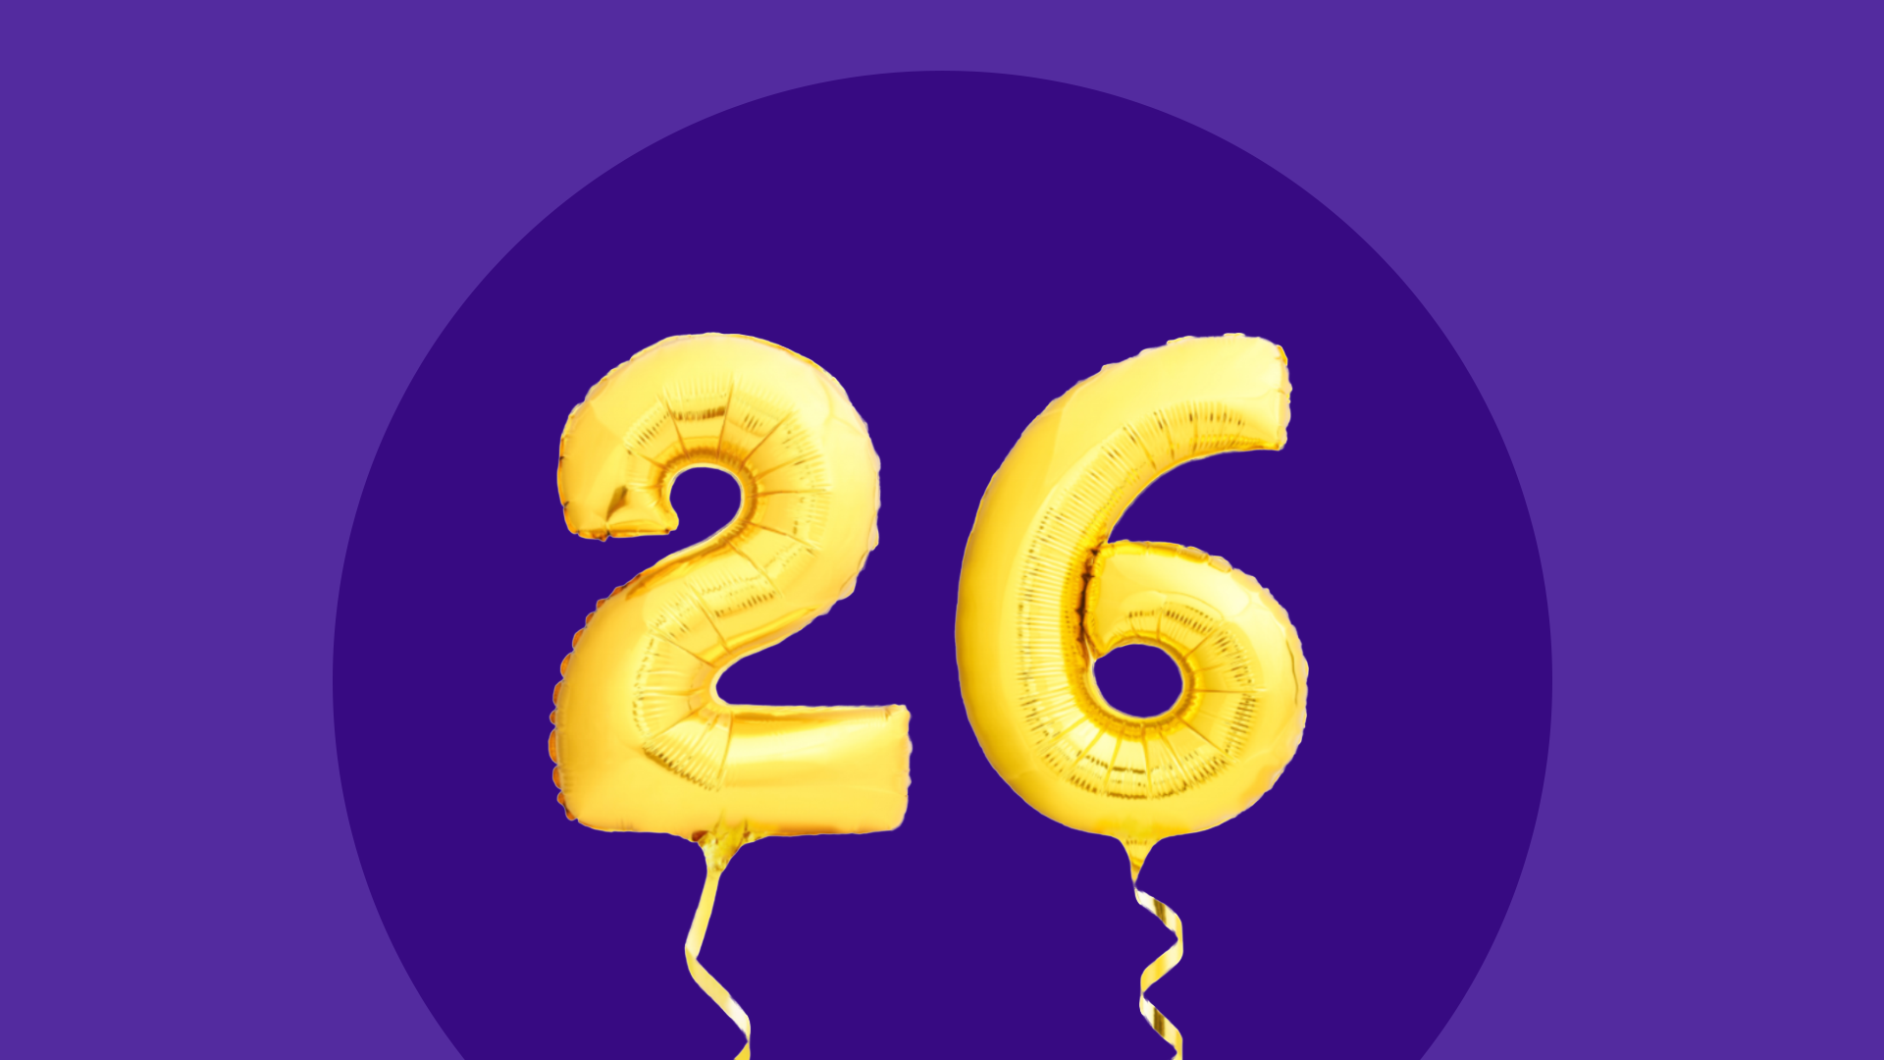 26 birthday balloons